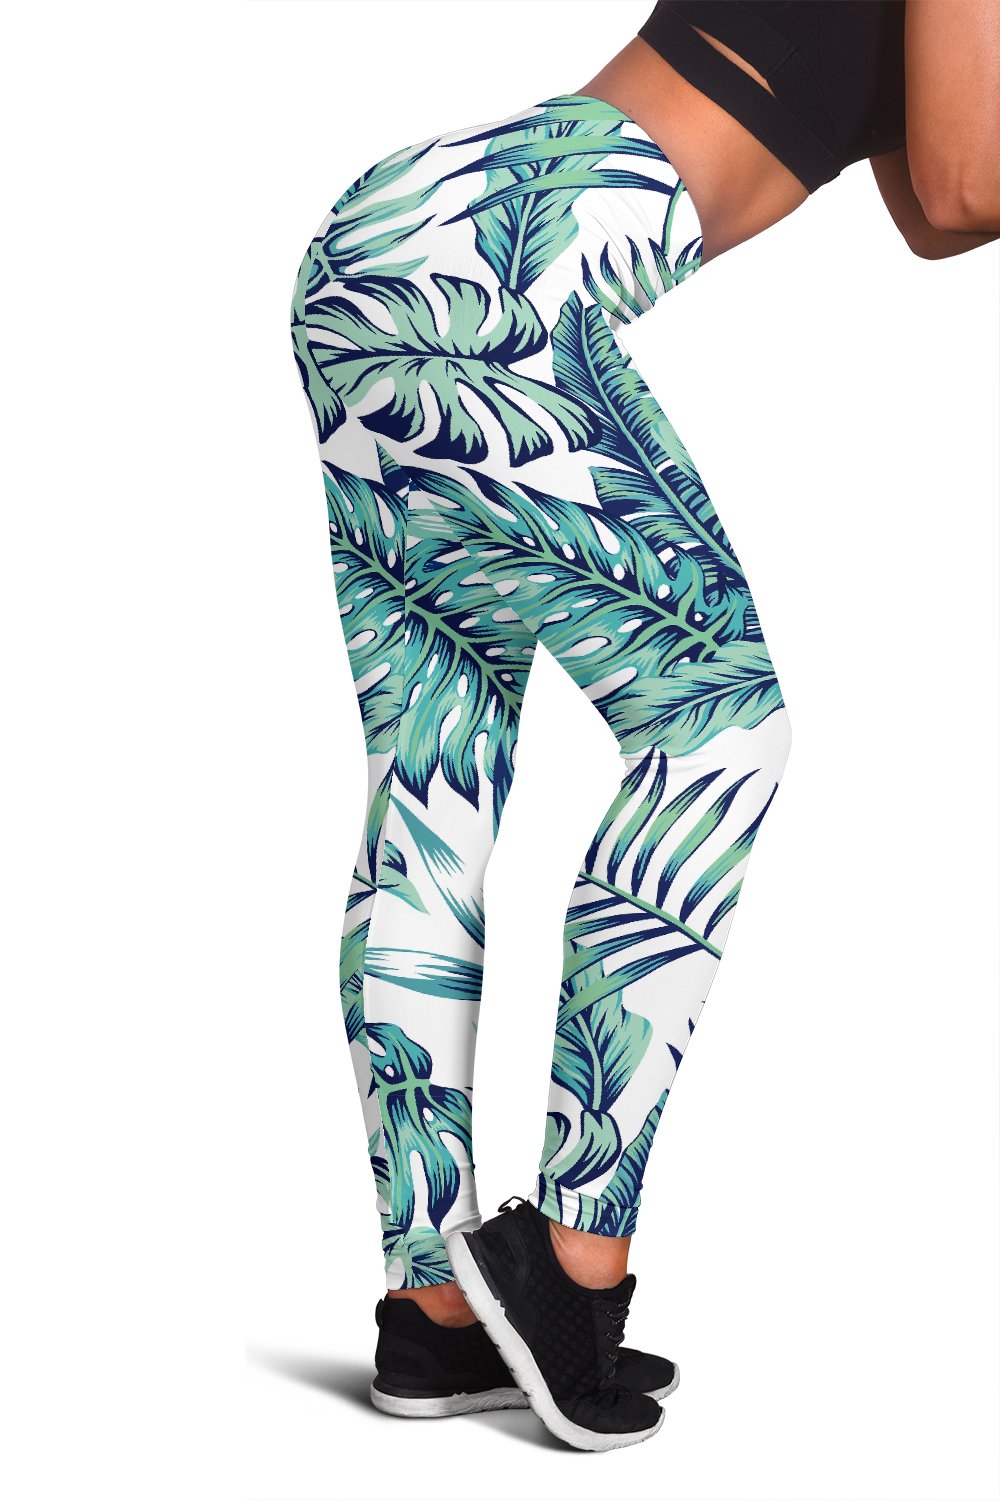 Pattern Tropical Palm Leaves Women Leggings - JTAMIGO.COM